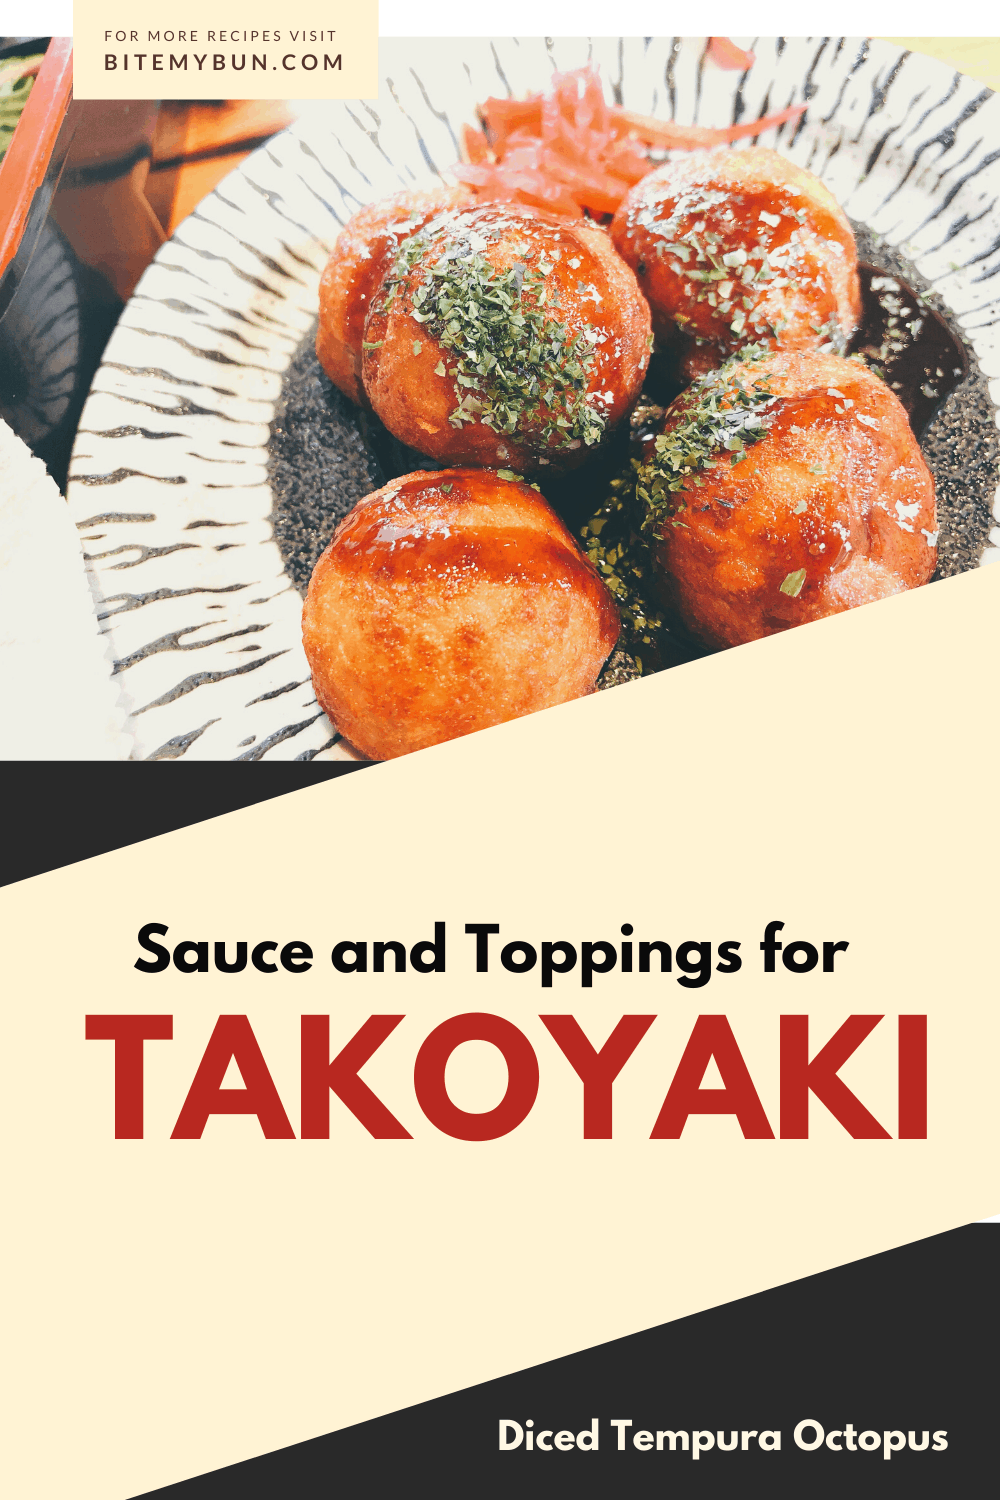 takoyaki sauce and toppings